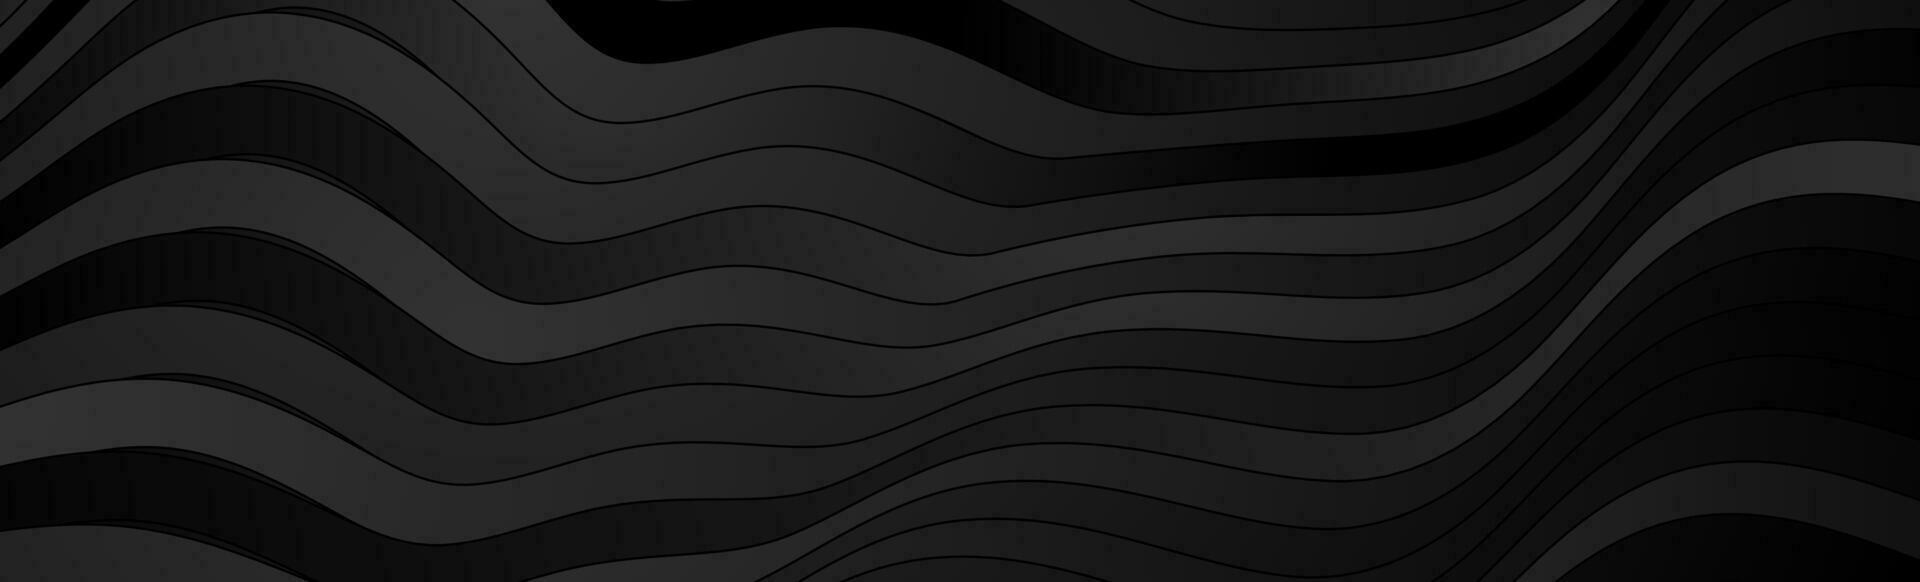 zwart golvend strepen abstract technologie meetkundig achtergrond vector